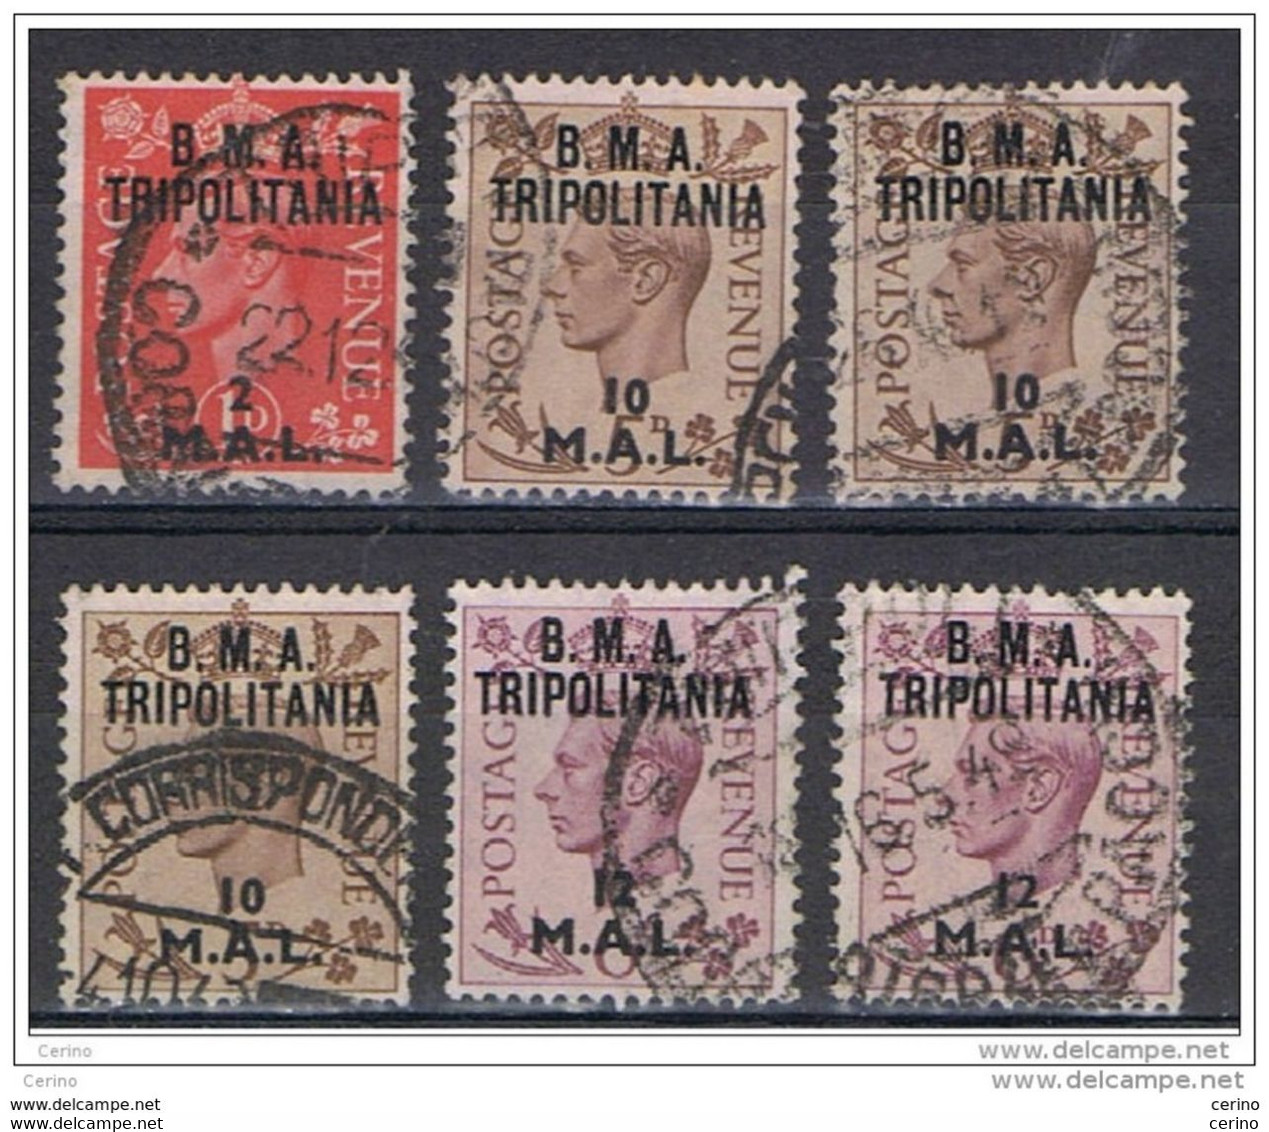 TRIPOLITANIA  B.M.A.:  1948  SOPRASTAMPATI  -  6  VAL. US. -  SASS. 2//8 - Tripolitania